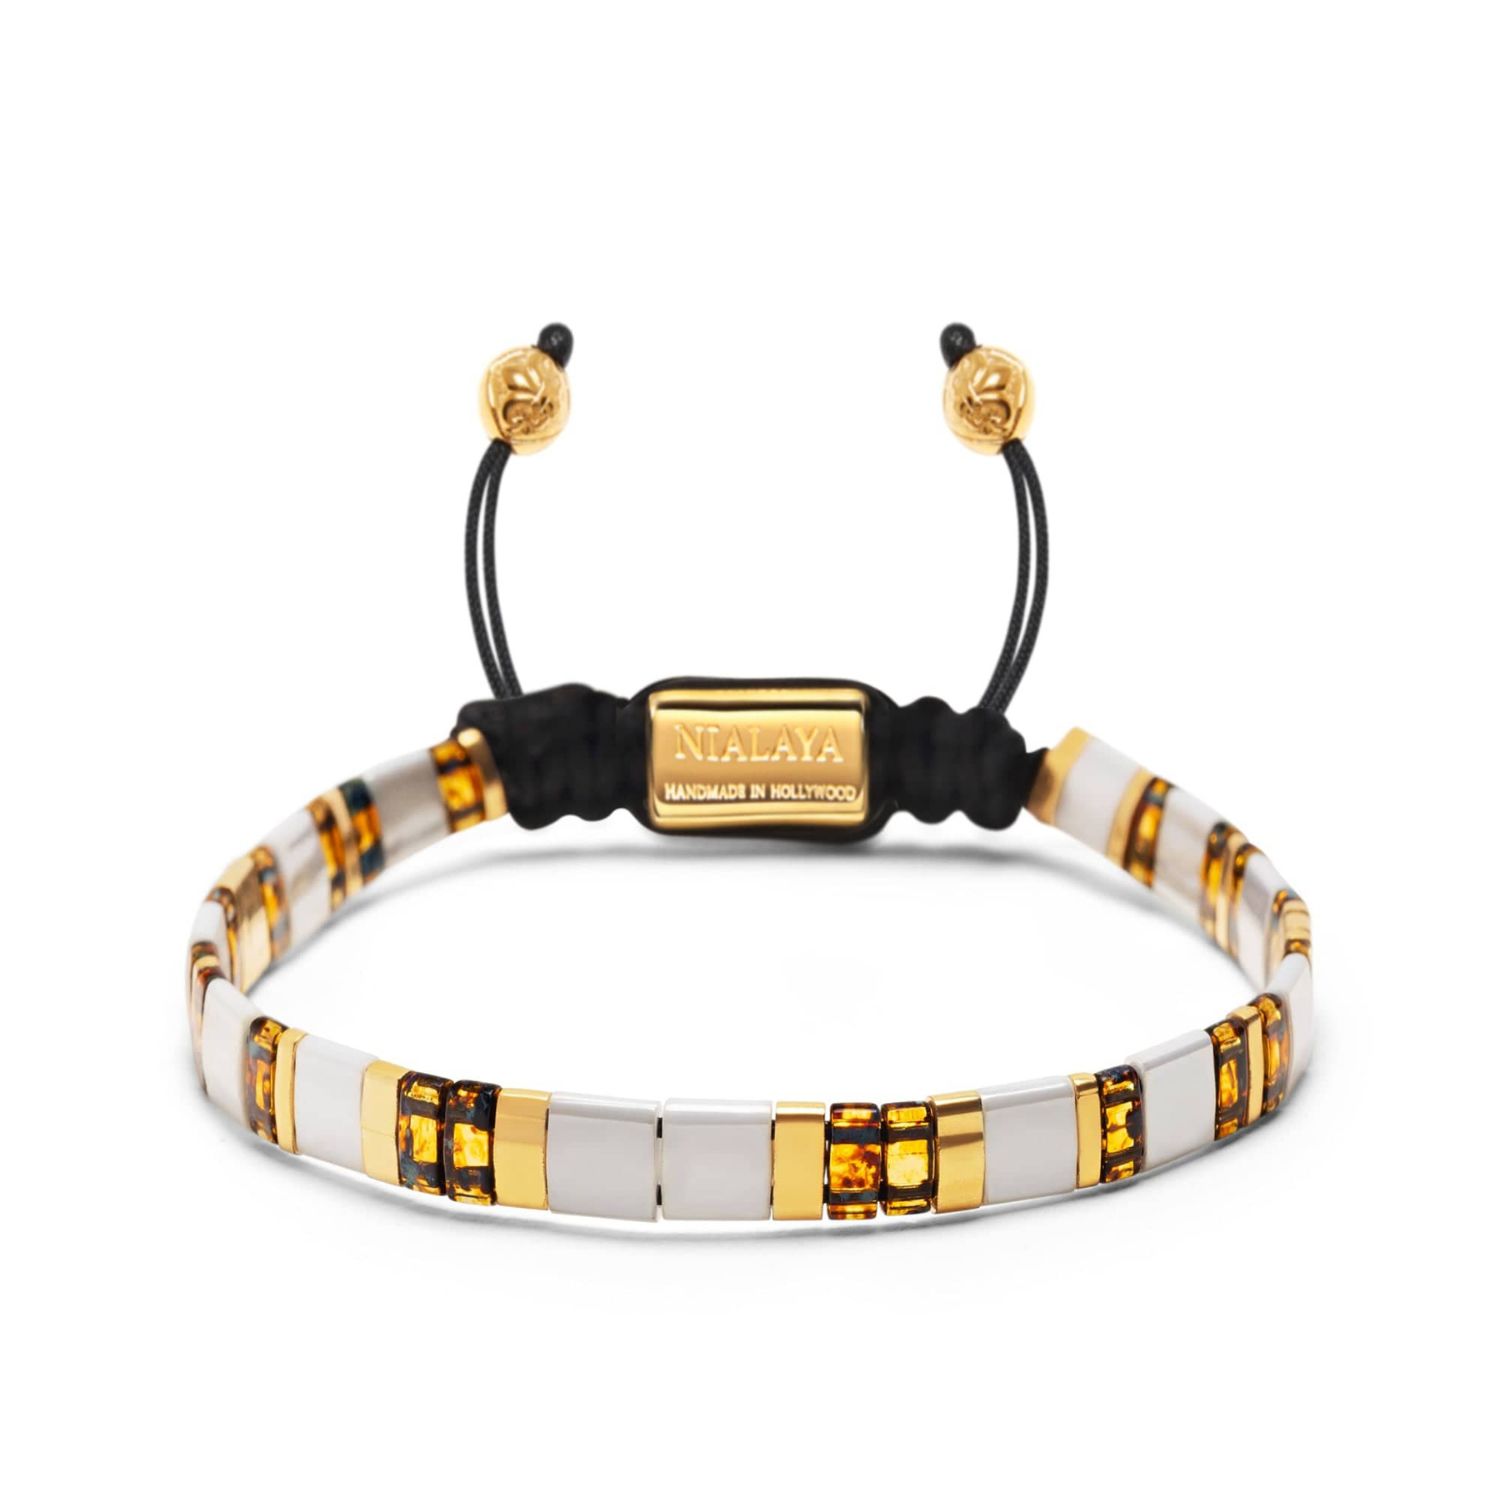 Nialaya Gold / White Men's Bracelet With White, Marbled Amber And Gold Miyuki Tila Beads In Gold/white